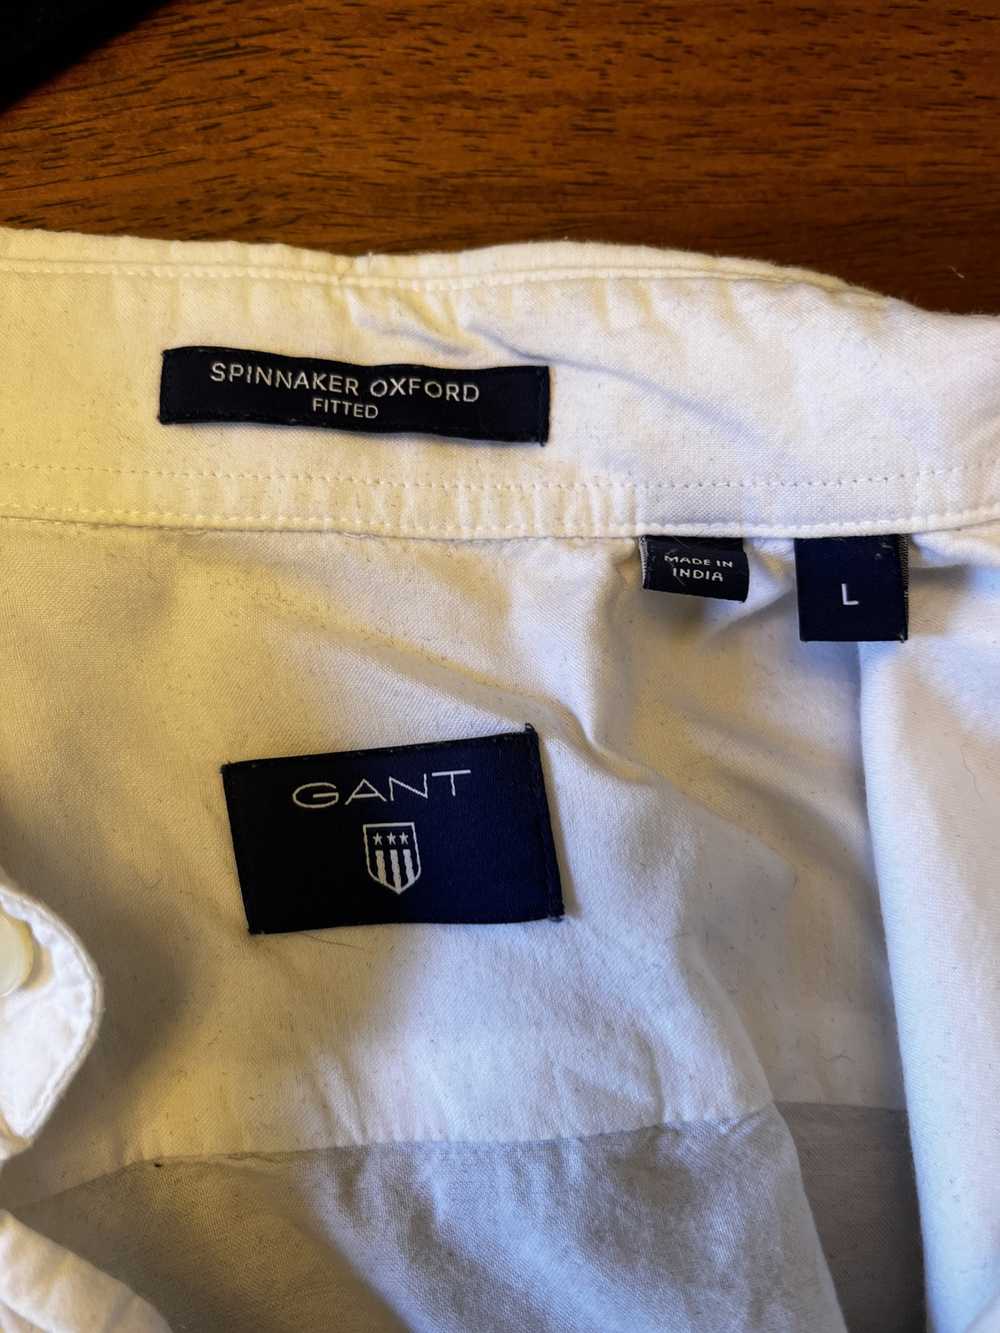 Gant Gant Fitted Oxford - image 3